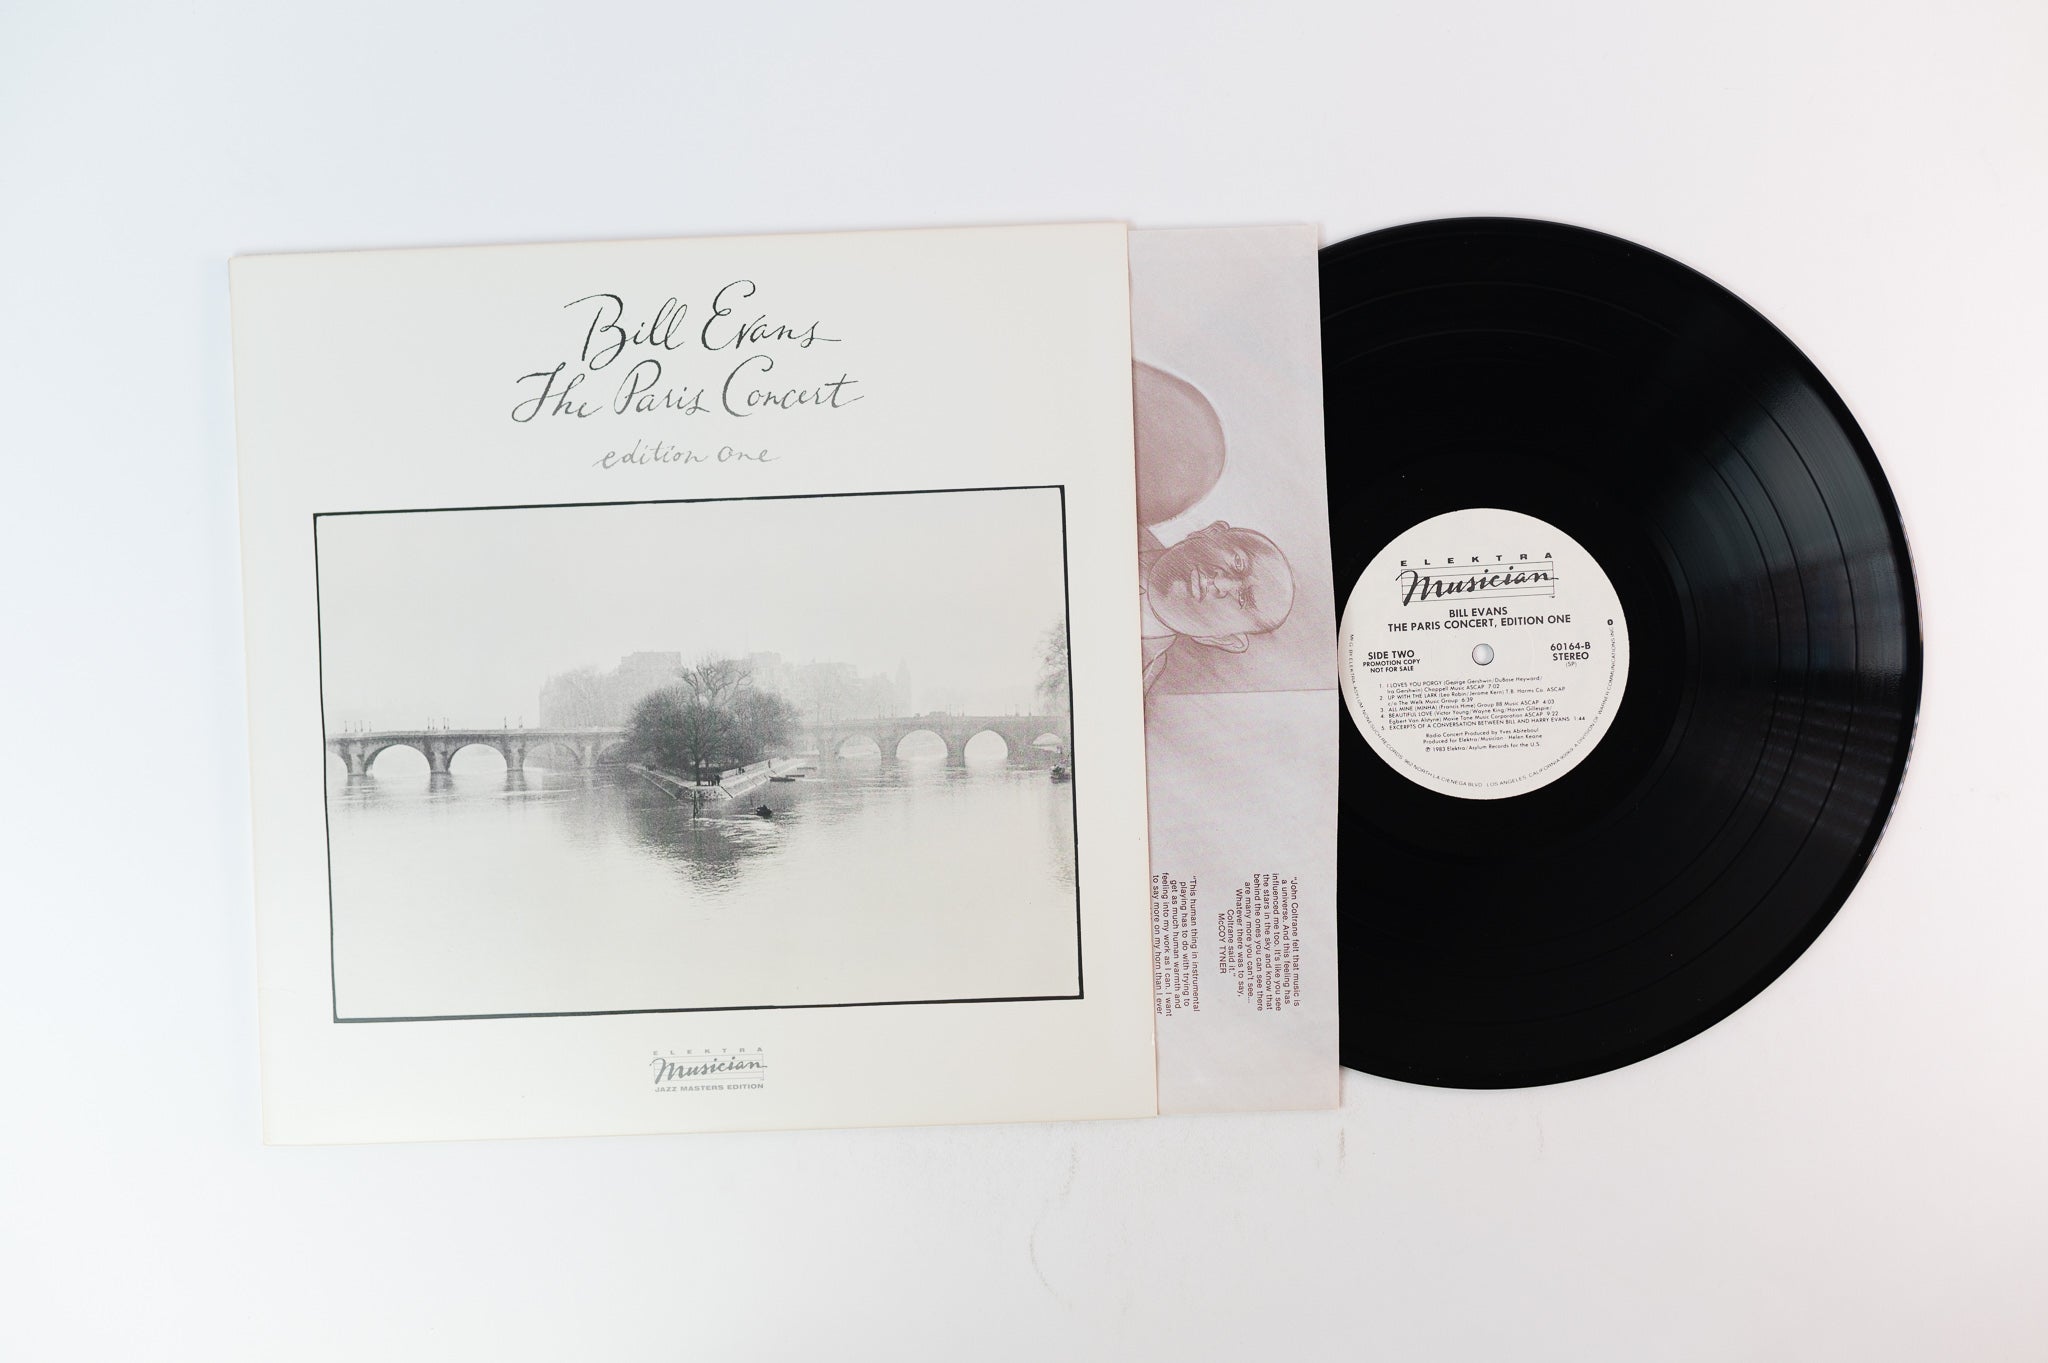 Bill Evans - The Paris Concert (Edition One) on Elektra Musician Promo